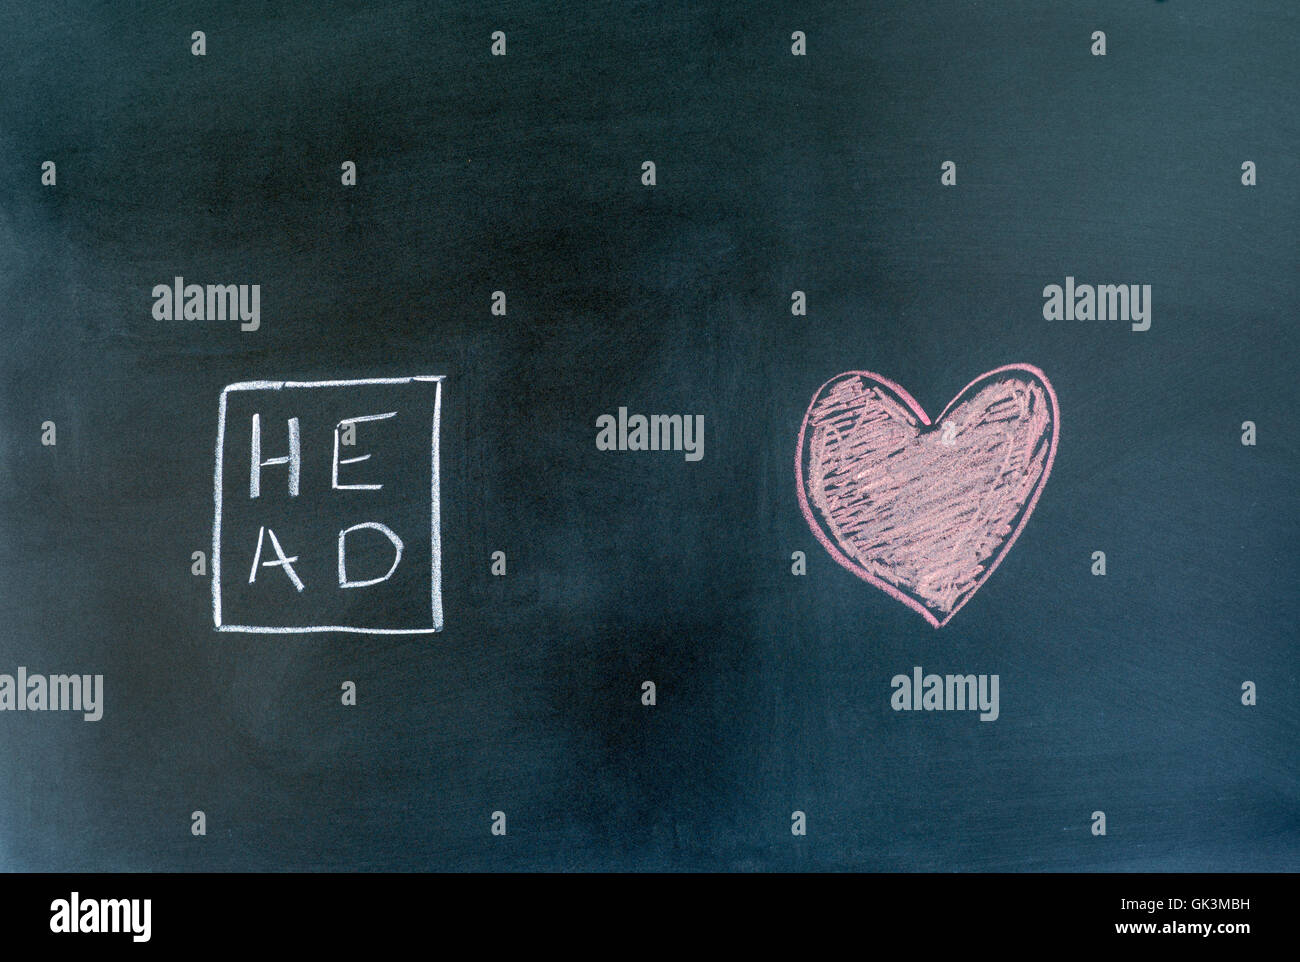 head and heart symbols drawn on a chalkboard. Stock Photo